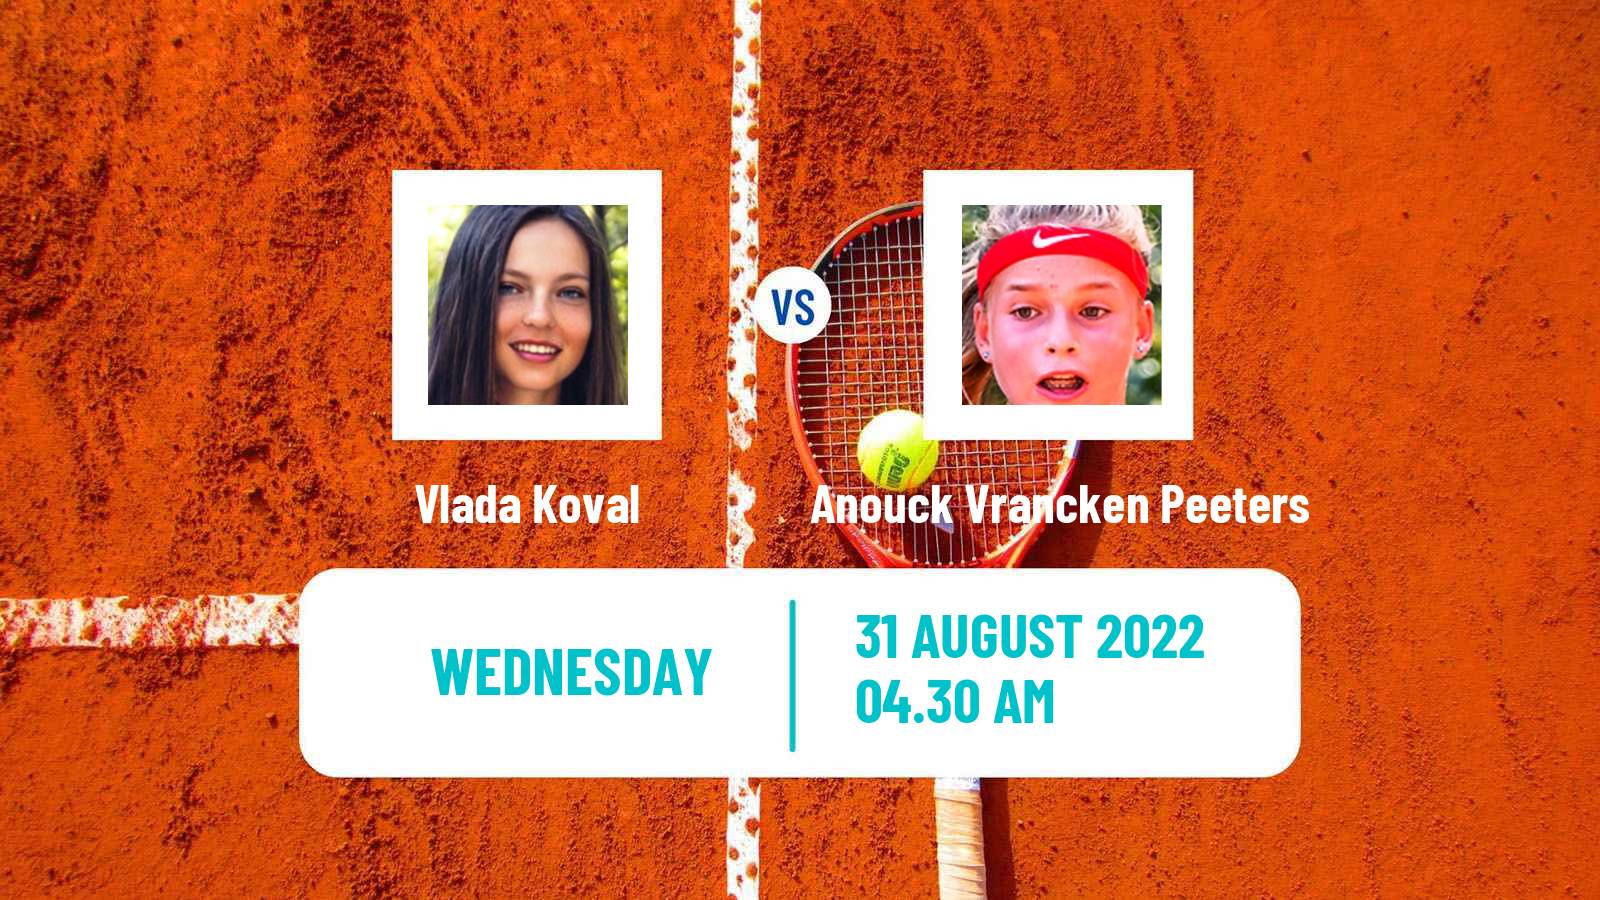 Tennis ITF Tournaments Vlada Koval - Anouck Vrancken Peeters